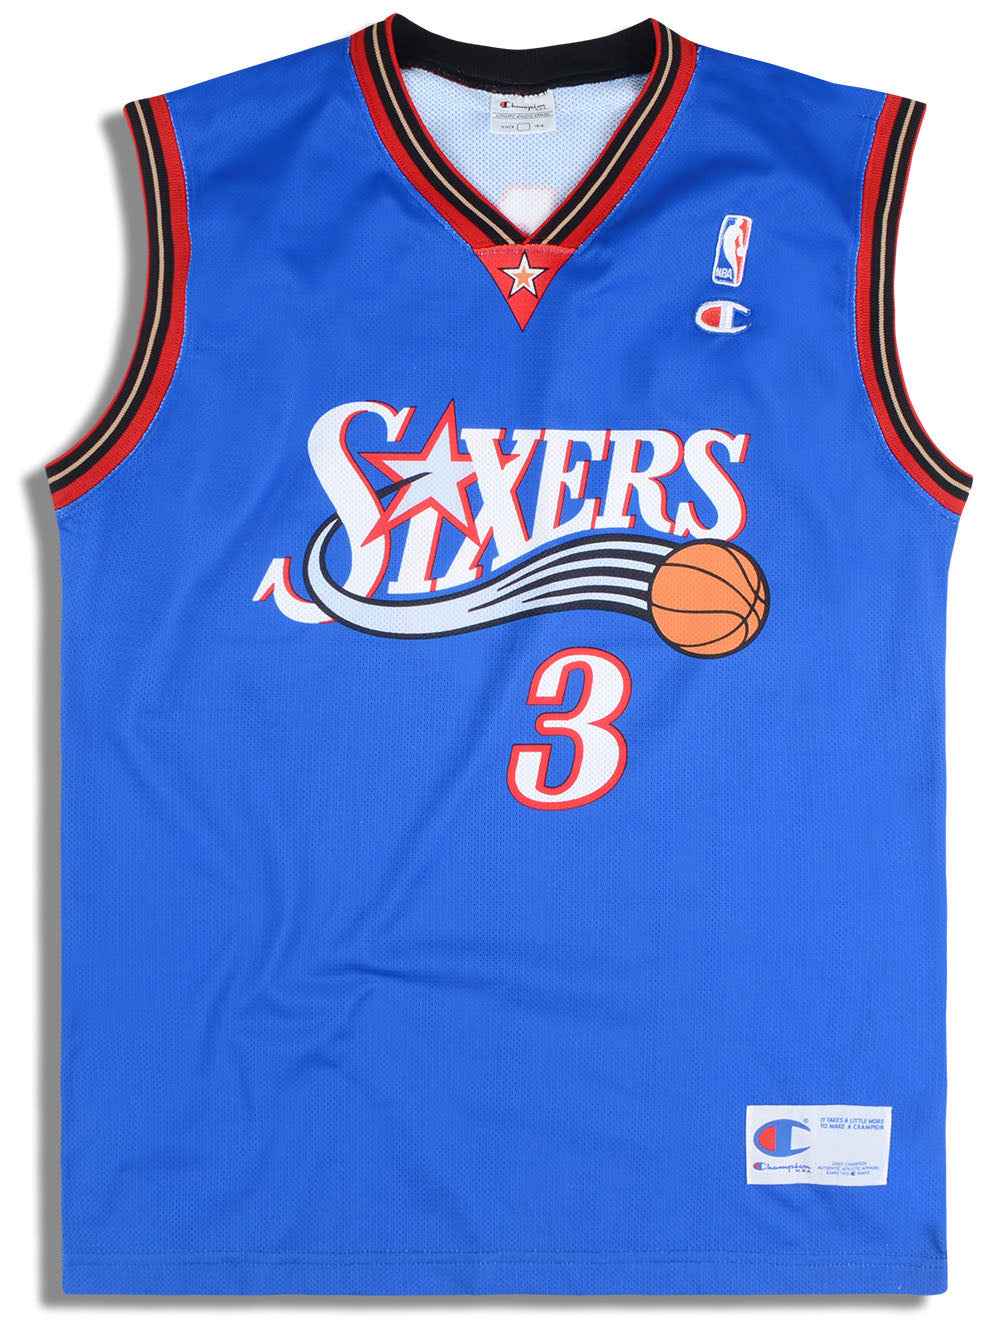 1998 Allen Iverson Philadelphia 76ers Gold Champion NBA Jersey Size 40  Medium – Rare VNTG